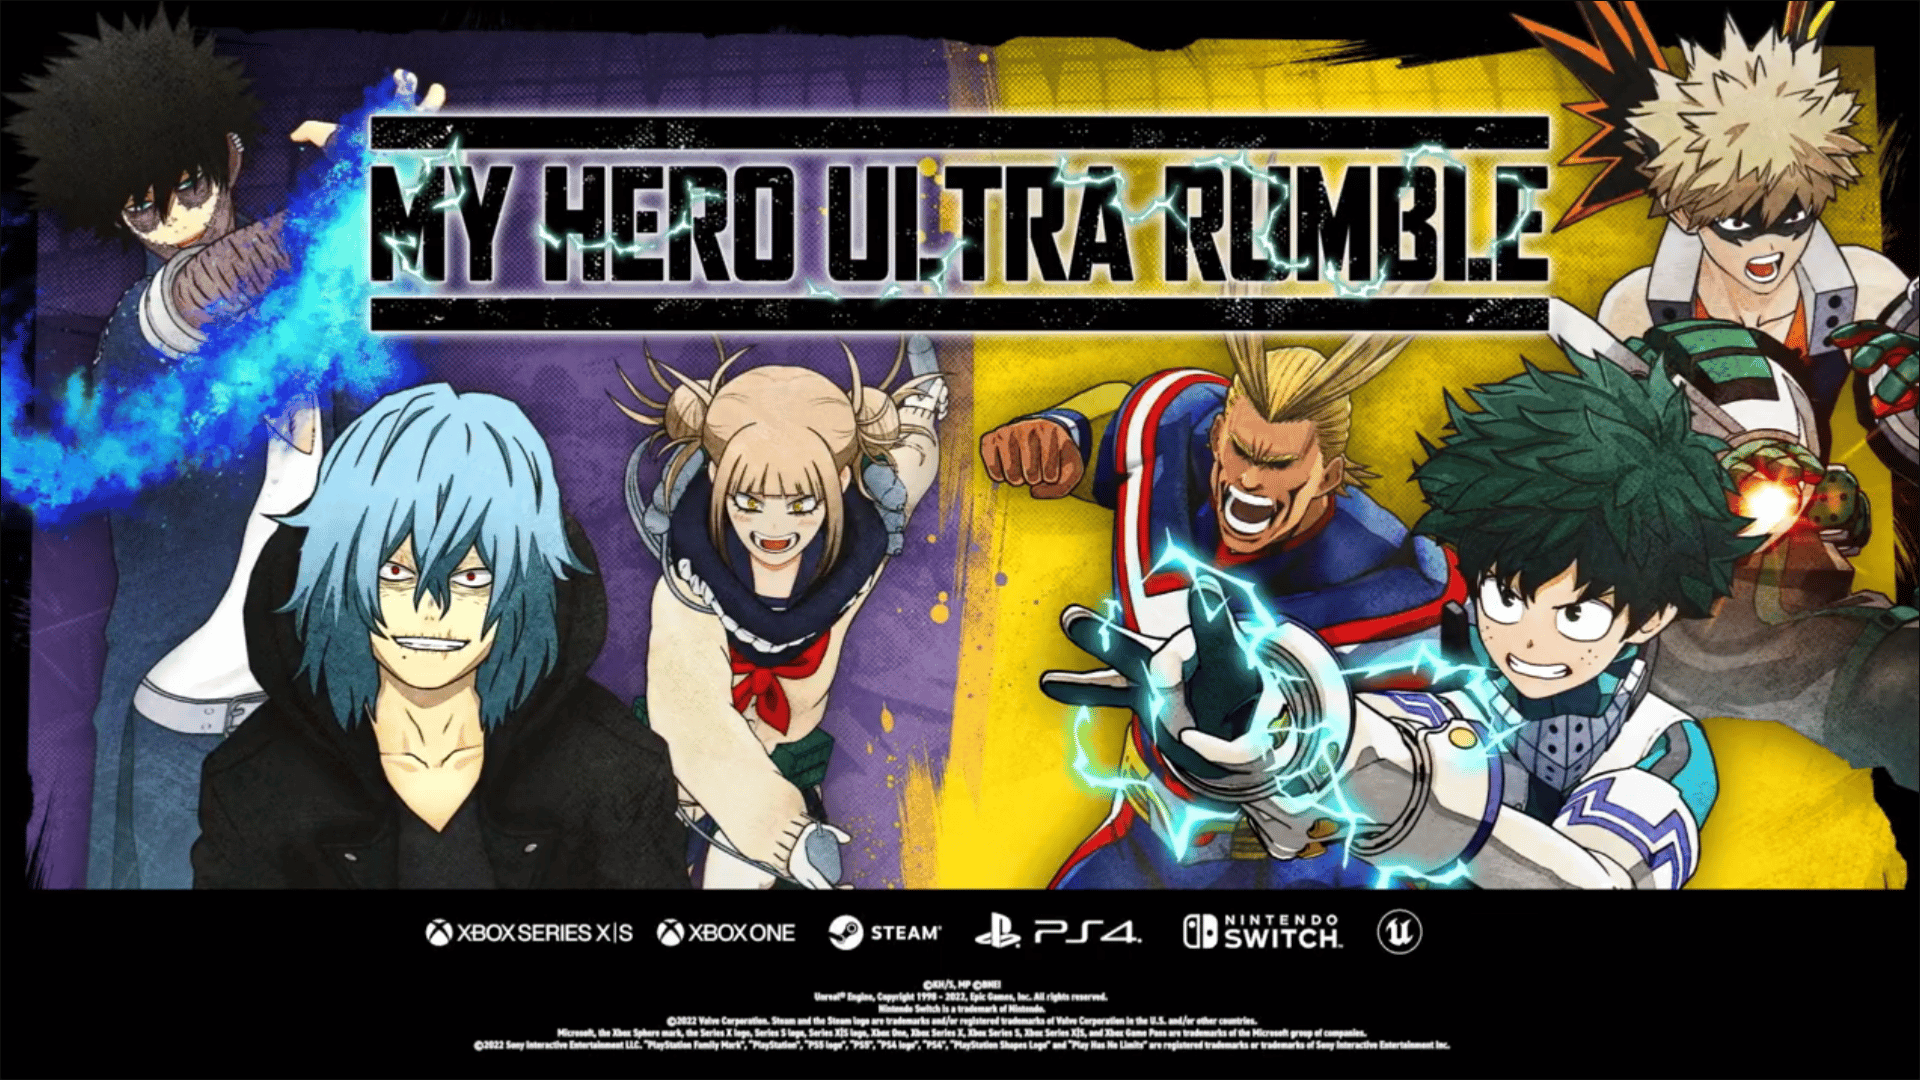 My Hero Ultra Rumble - Release Date Trailer